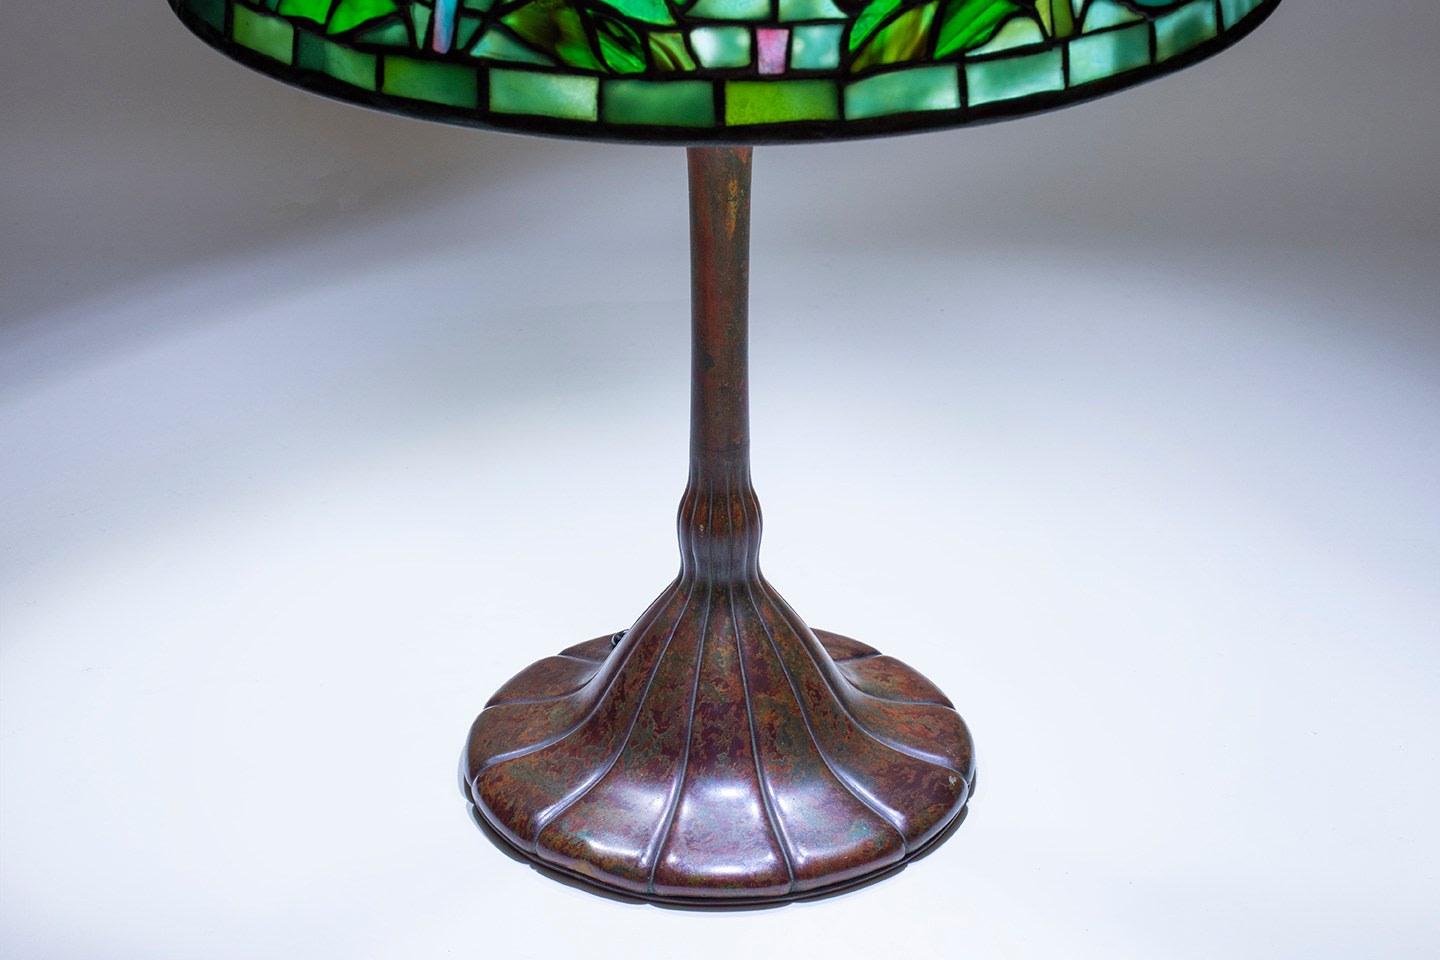 Poinsettia Table Lamp